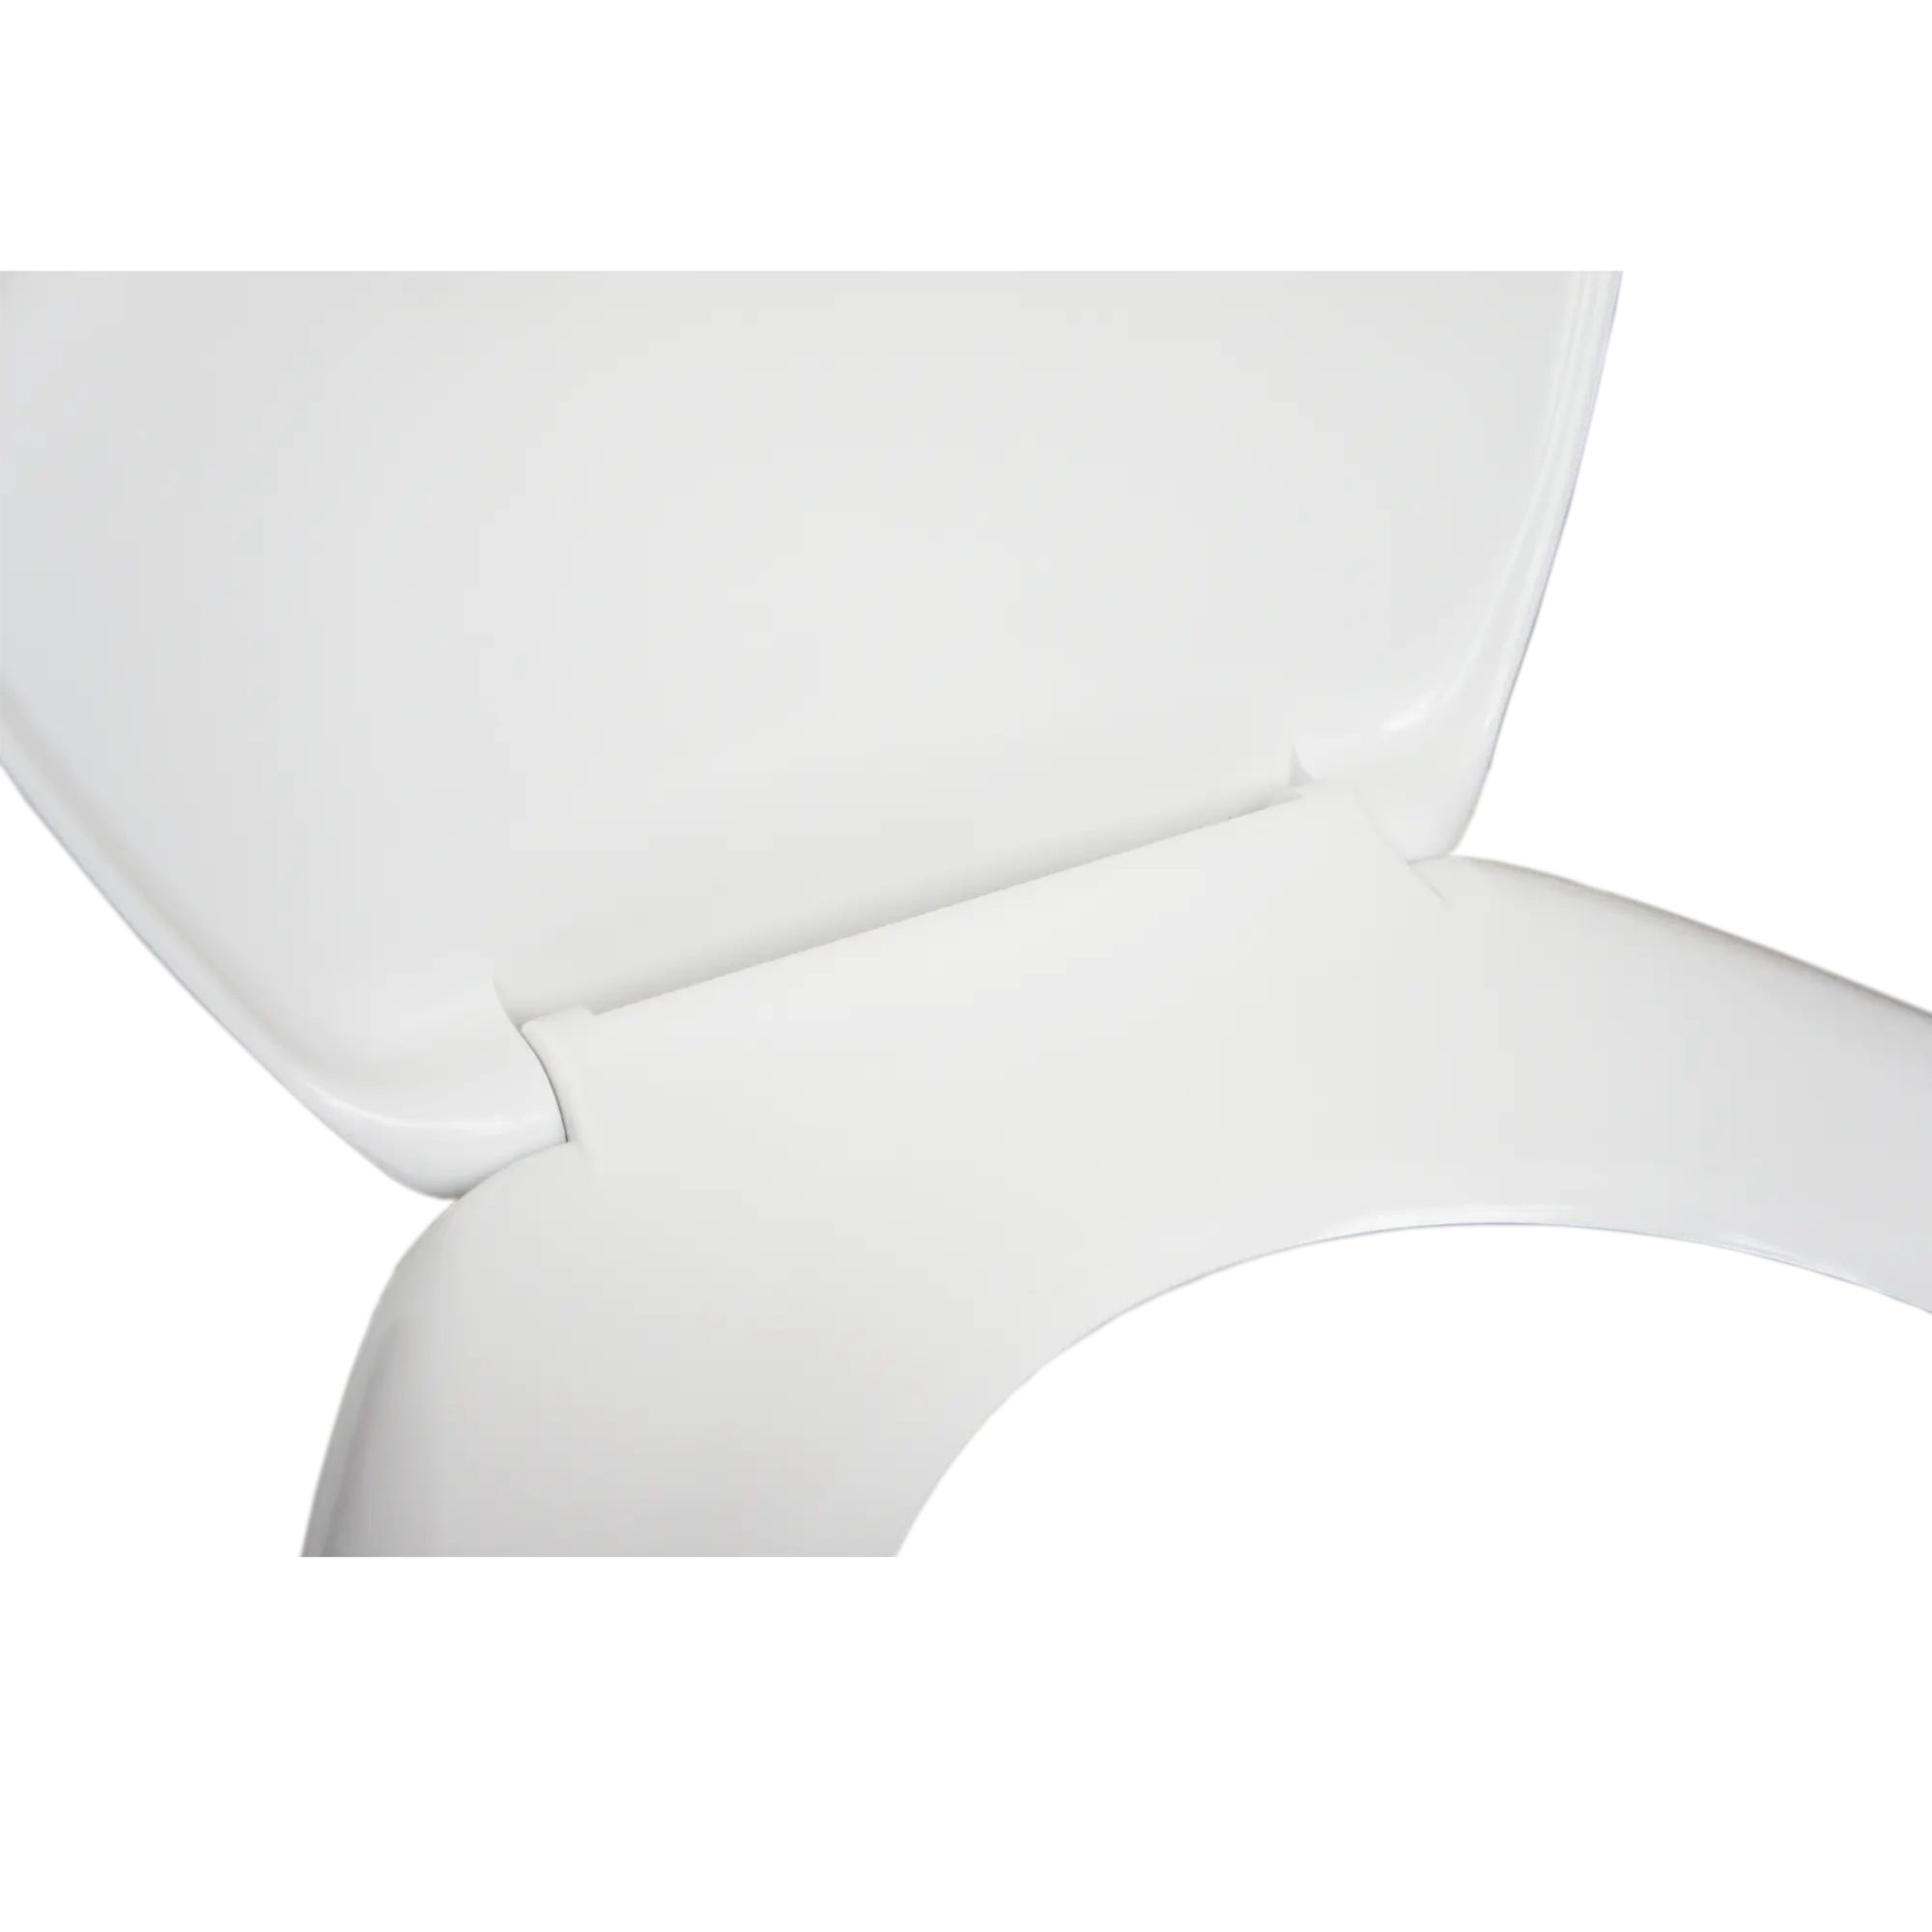 Copriwater ovale Universale Easy SENSEA duroplast bianco - 8